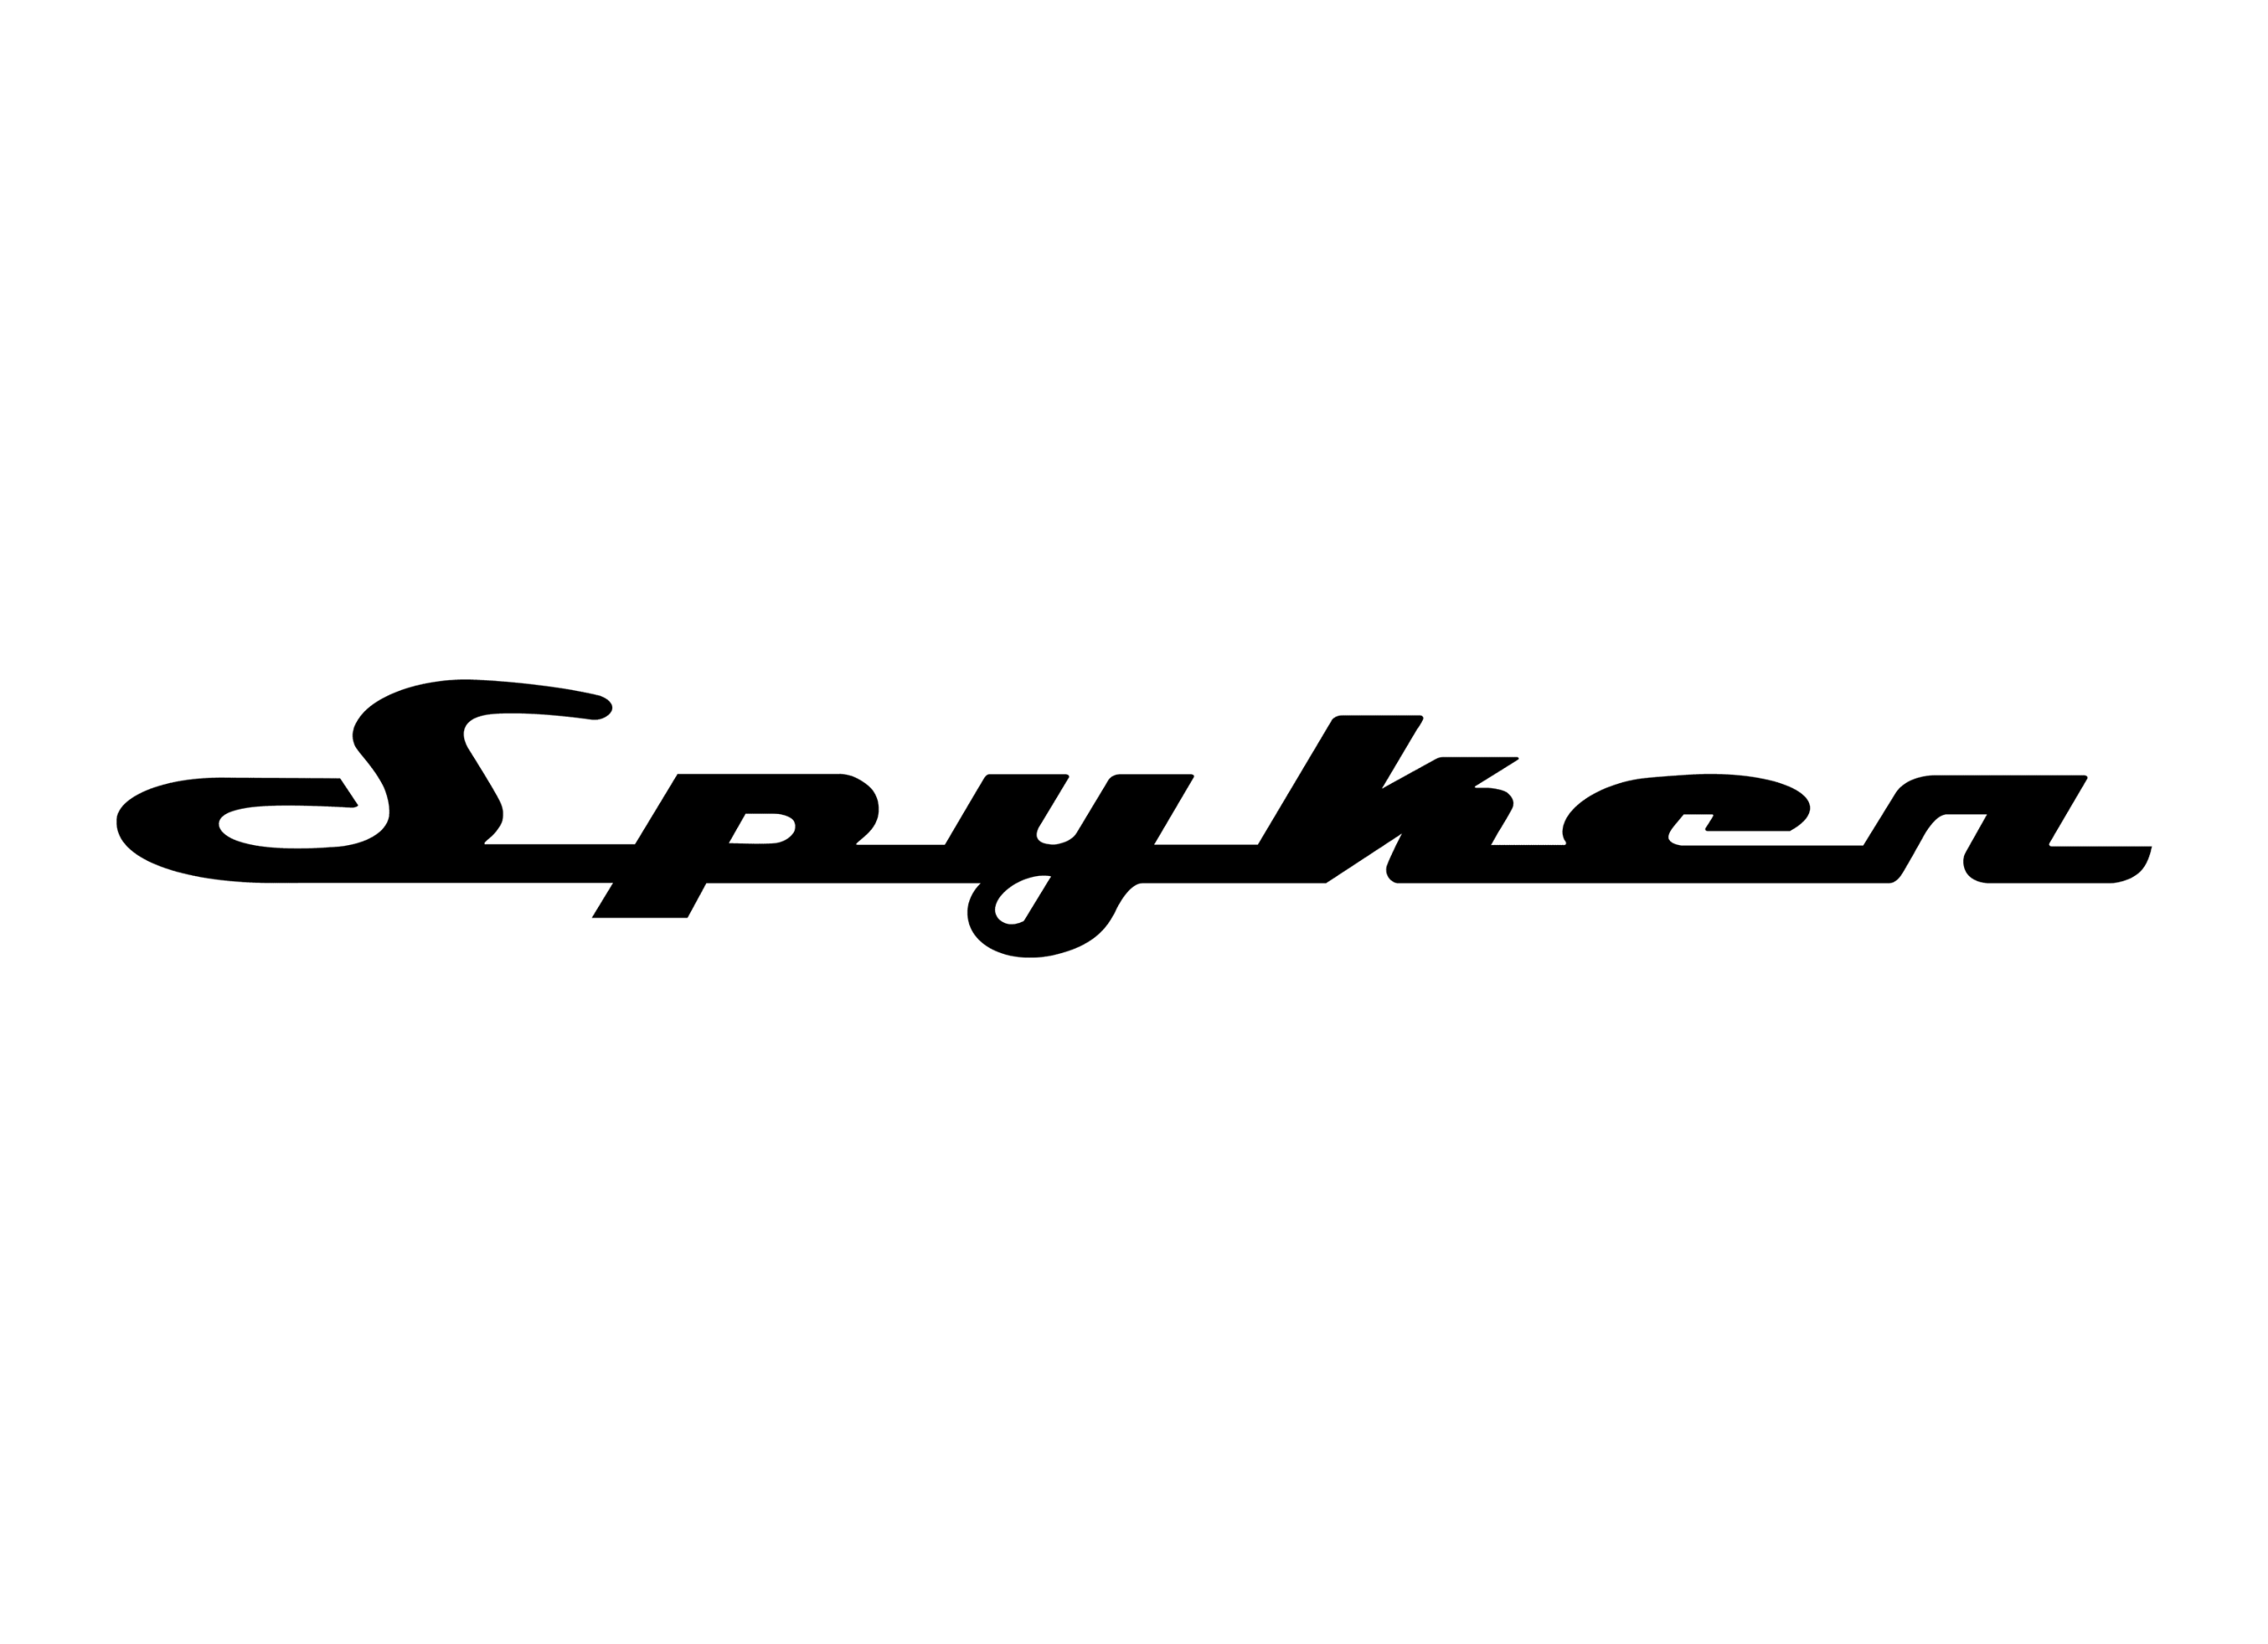 Spyker logo 1880-present